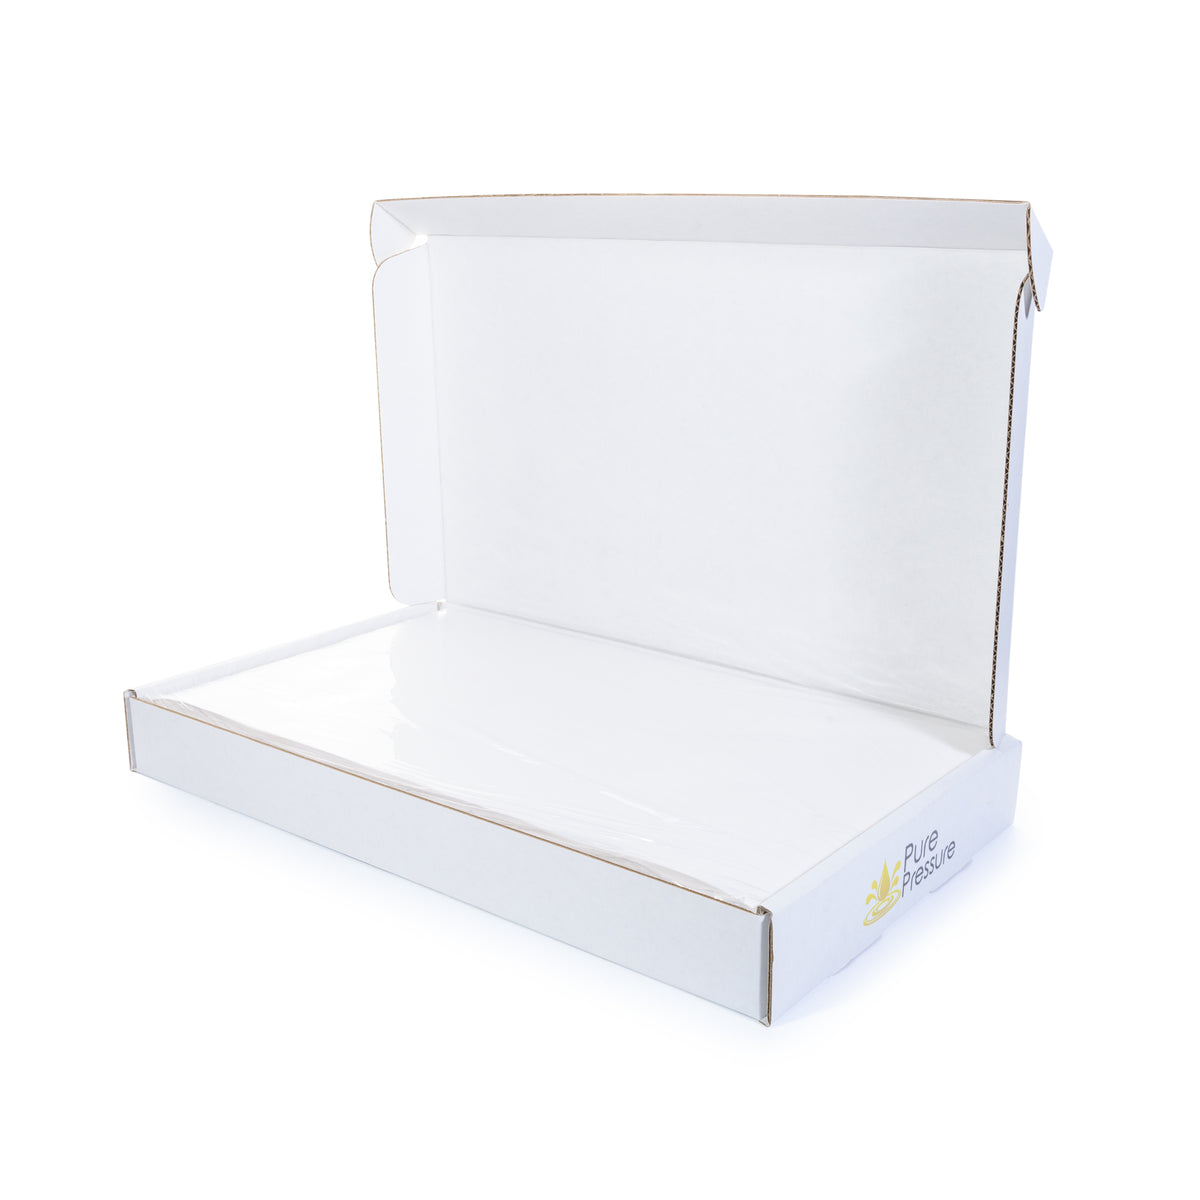 RAW Parchment Squares 3 x 3 - 500 Per Box – Flower Power Packages